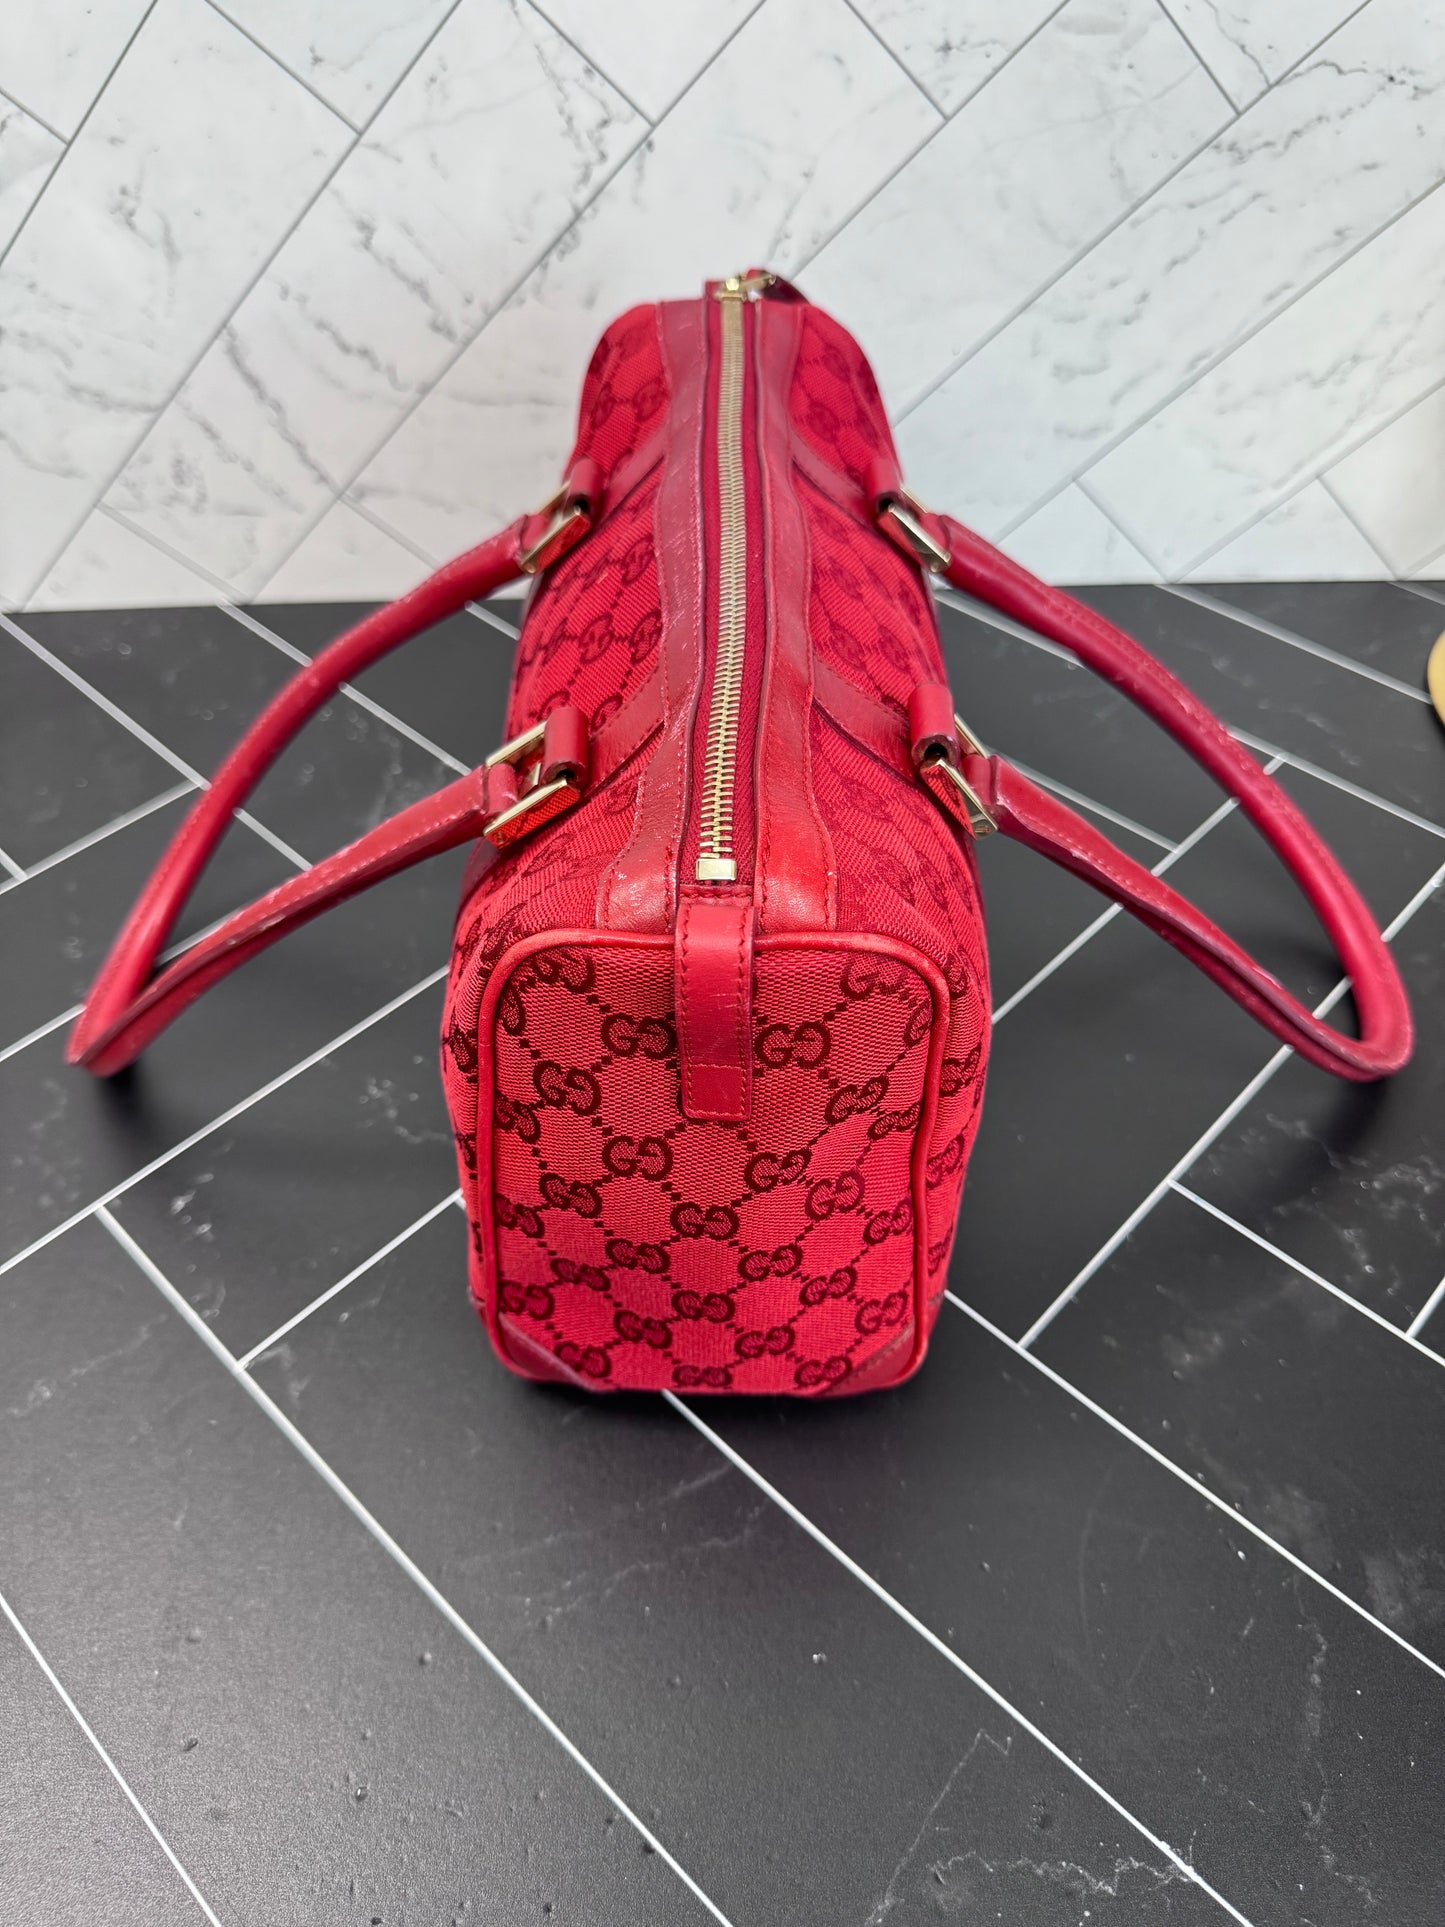 Gucci Red Canvas Shoulder Bag